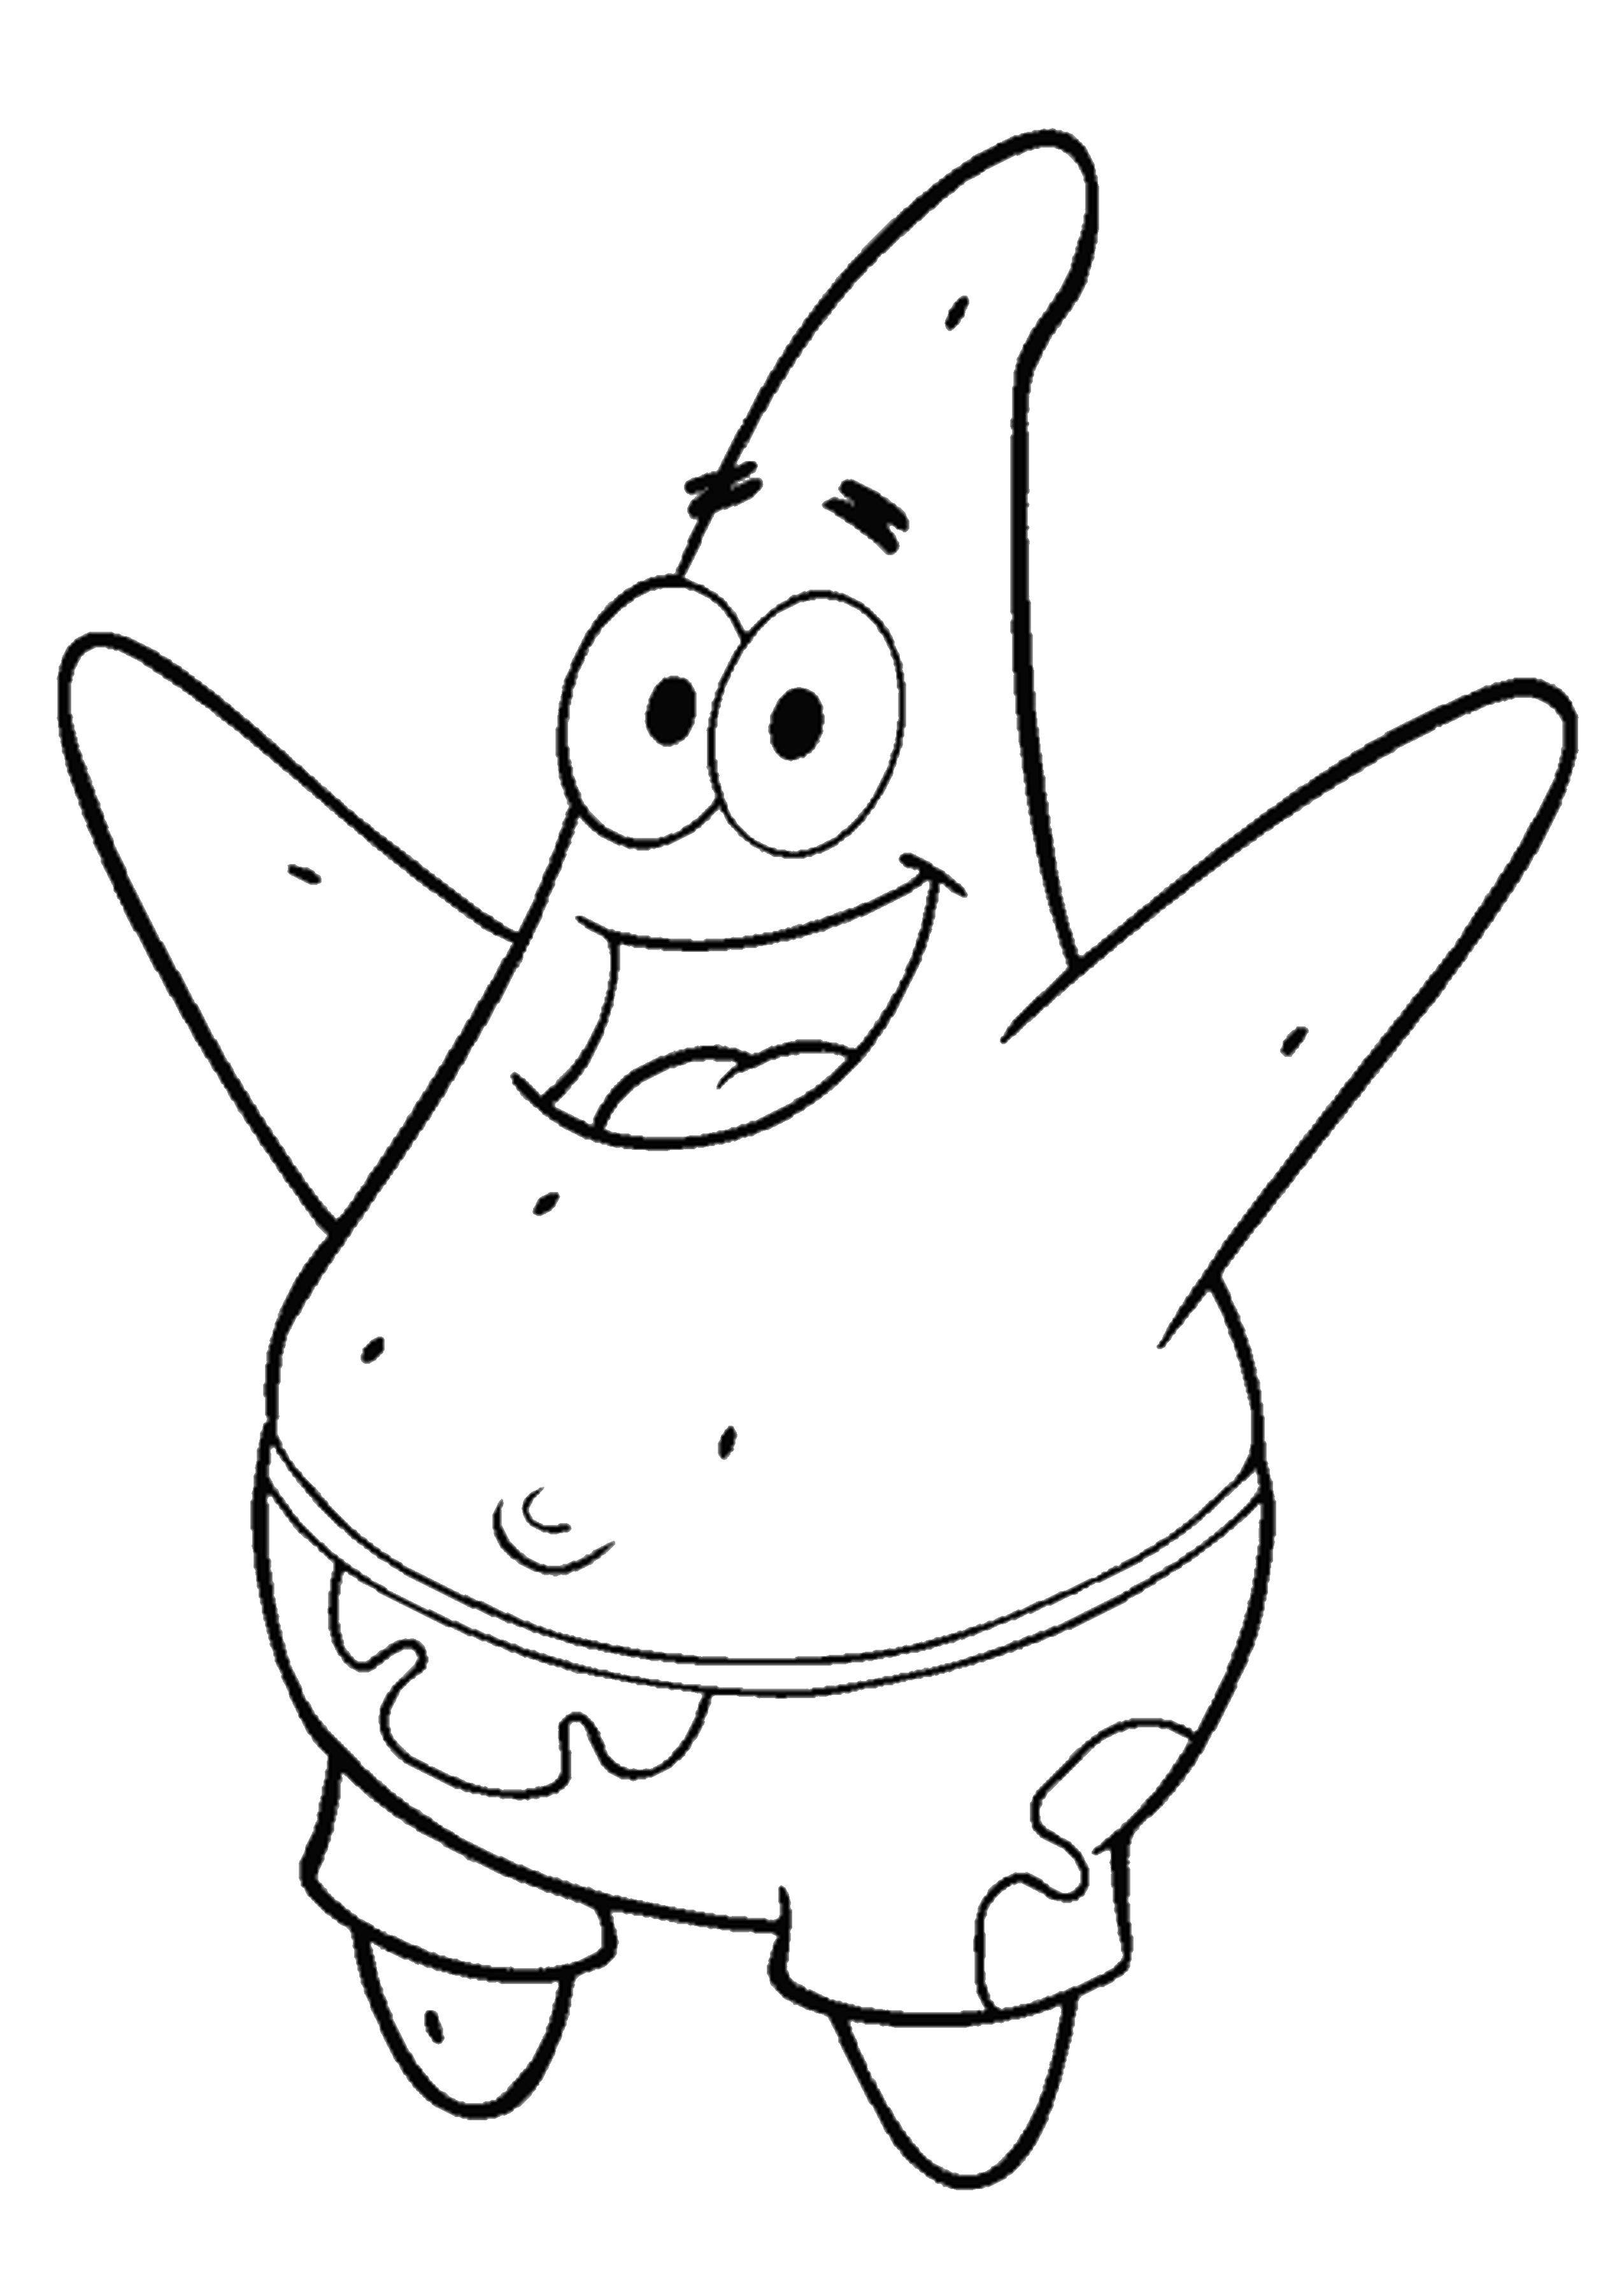 Coloring Joyful Patrick. Category Spongebob. Tags:  Cartoon character, spongebob, spongebob, Patrick.